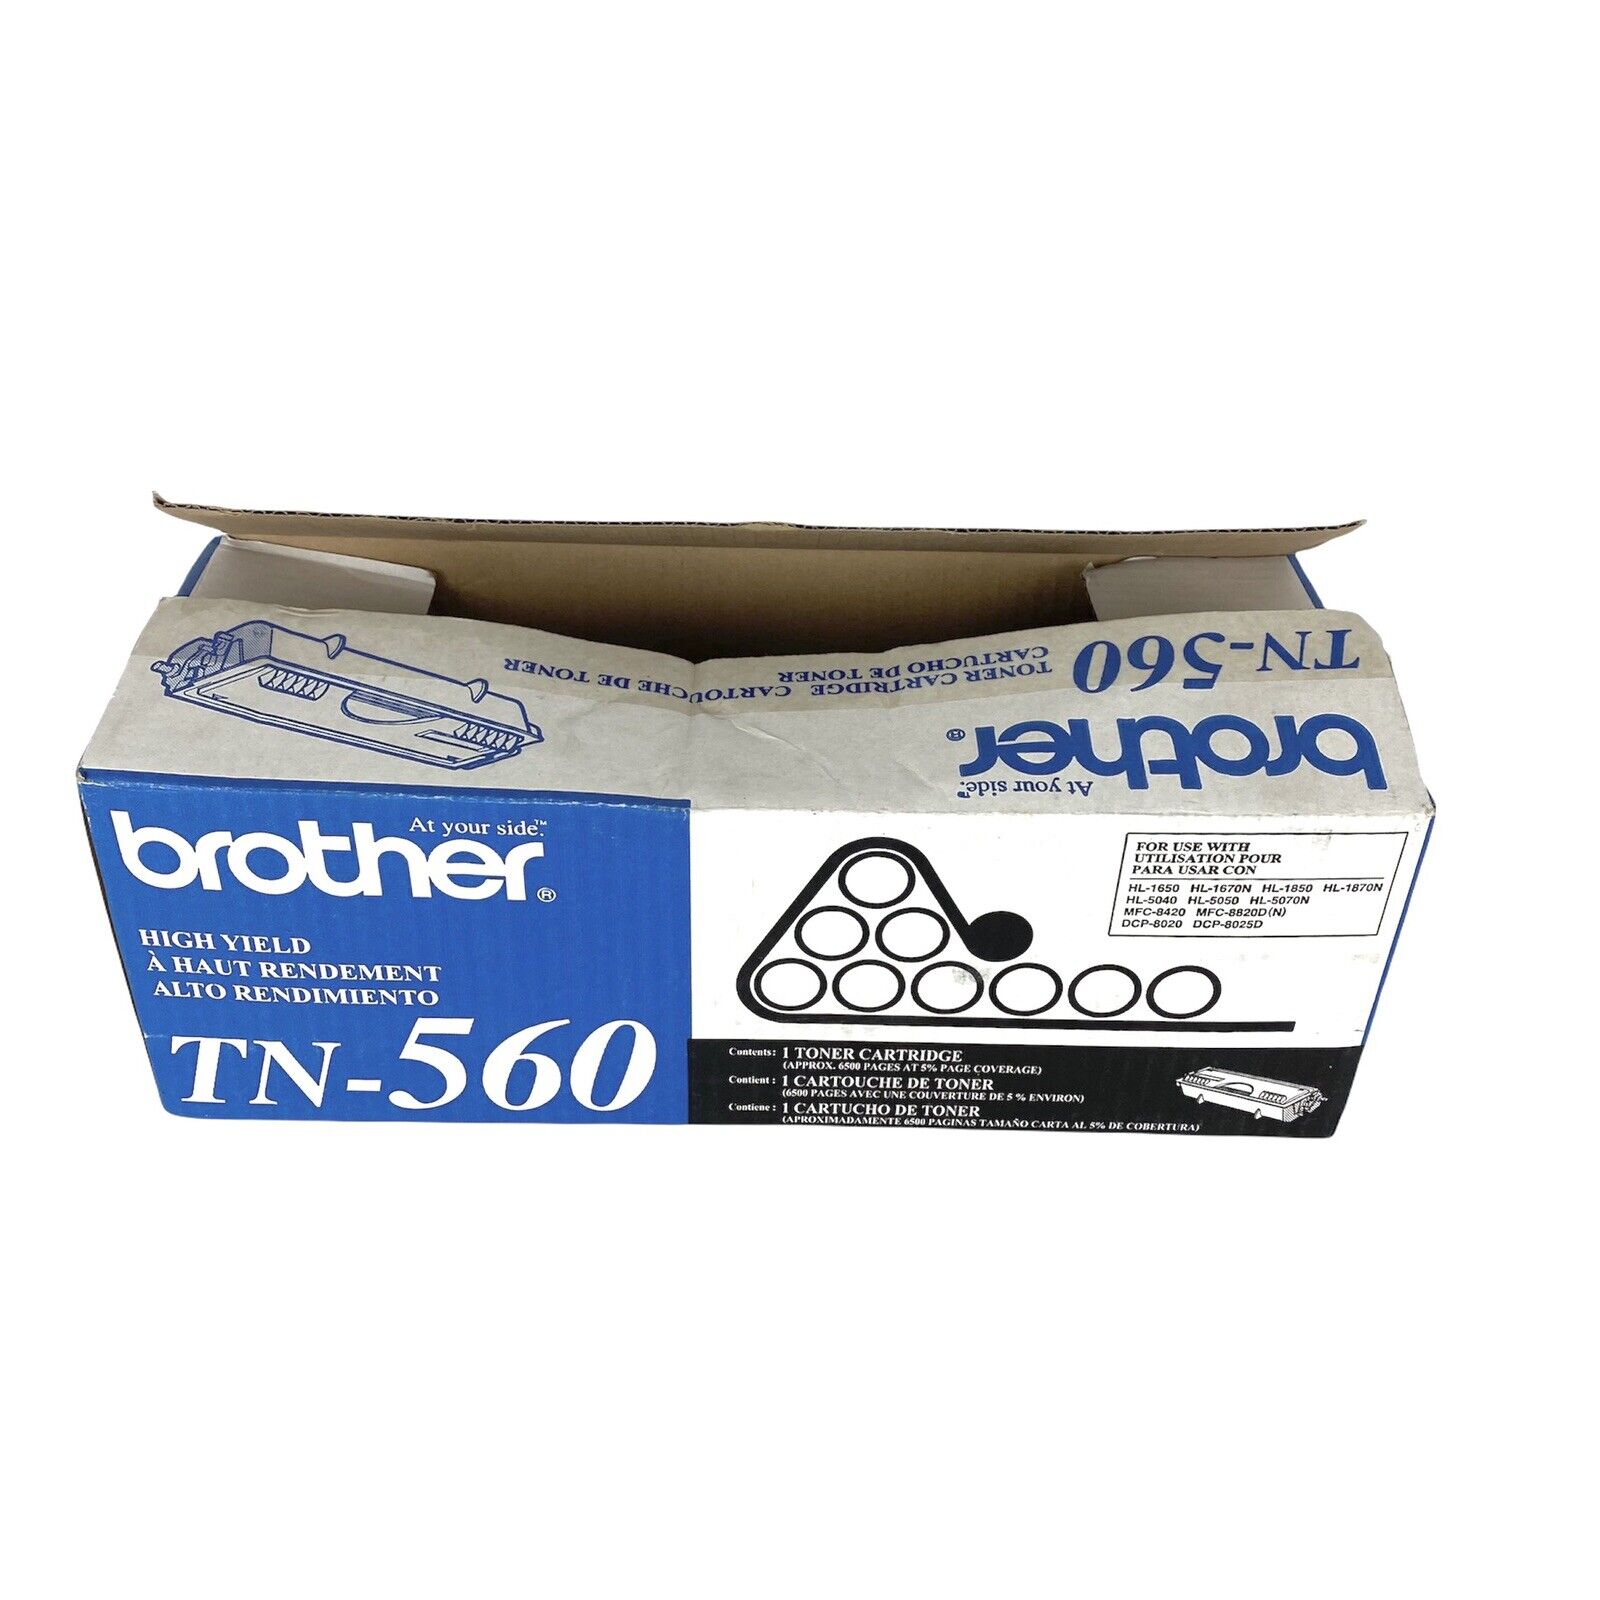 Brother TN-560 Toner Cartridge Open Box Sealed Bag Black